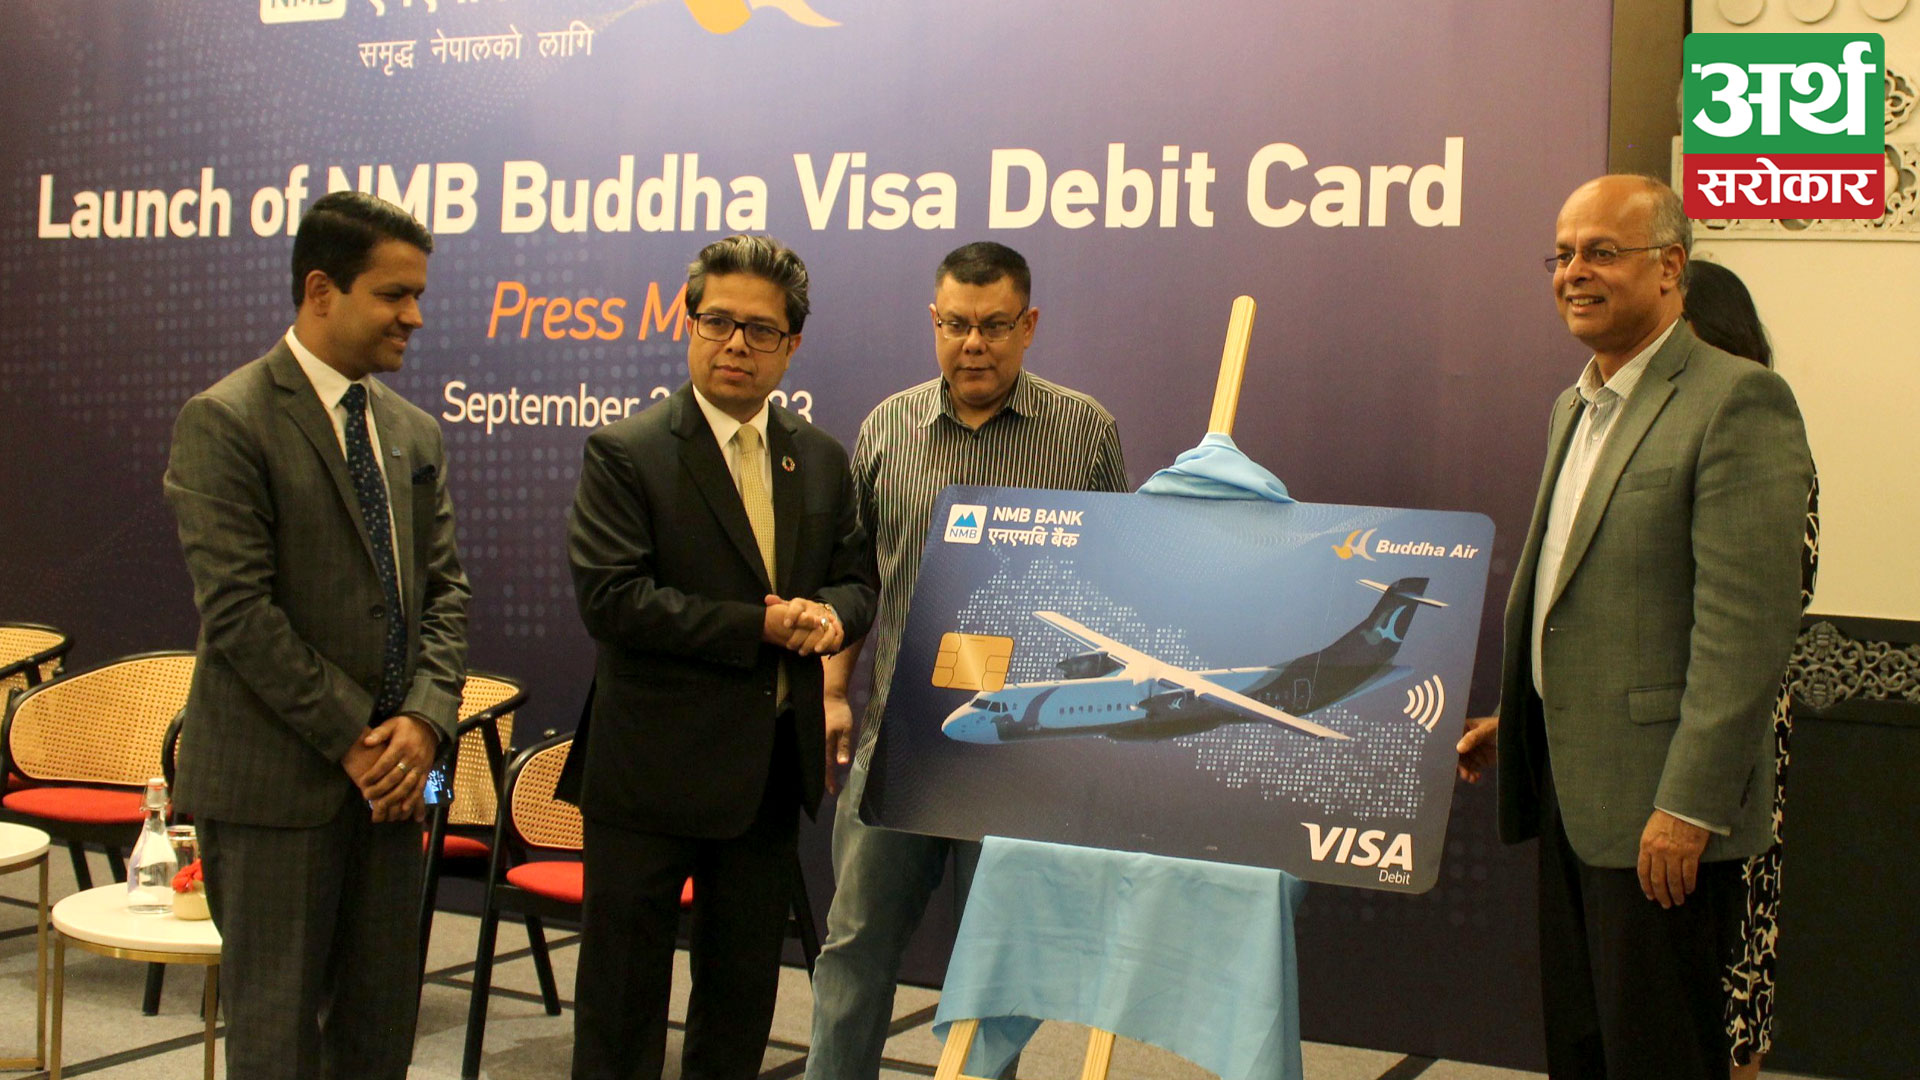 NMB Buddha VISA Debit Card Launched